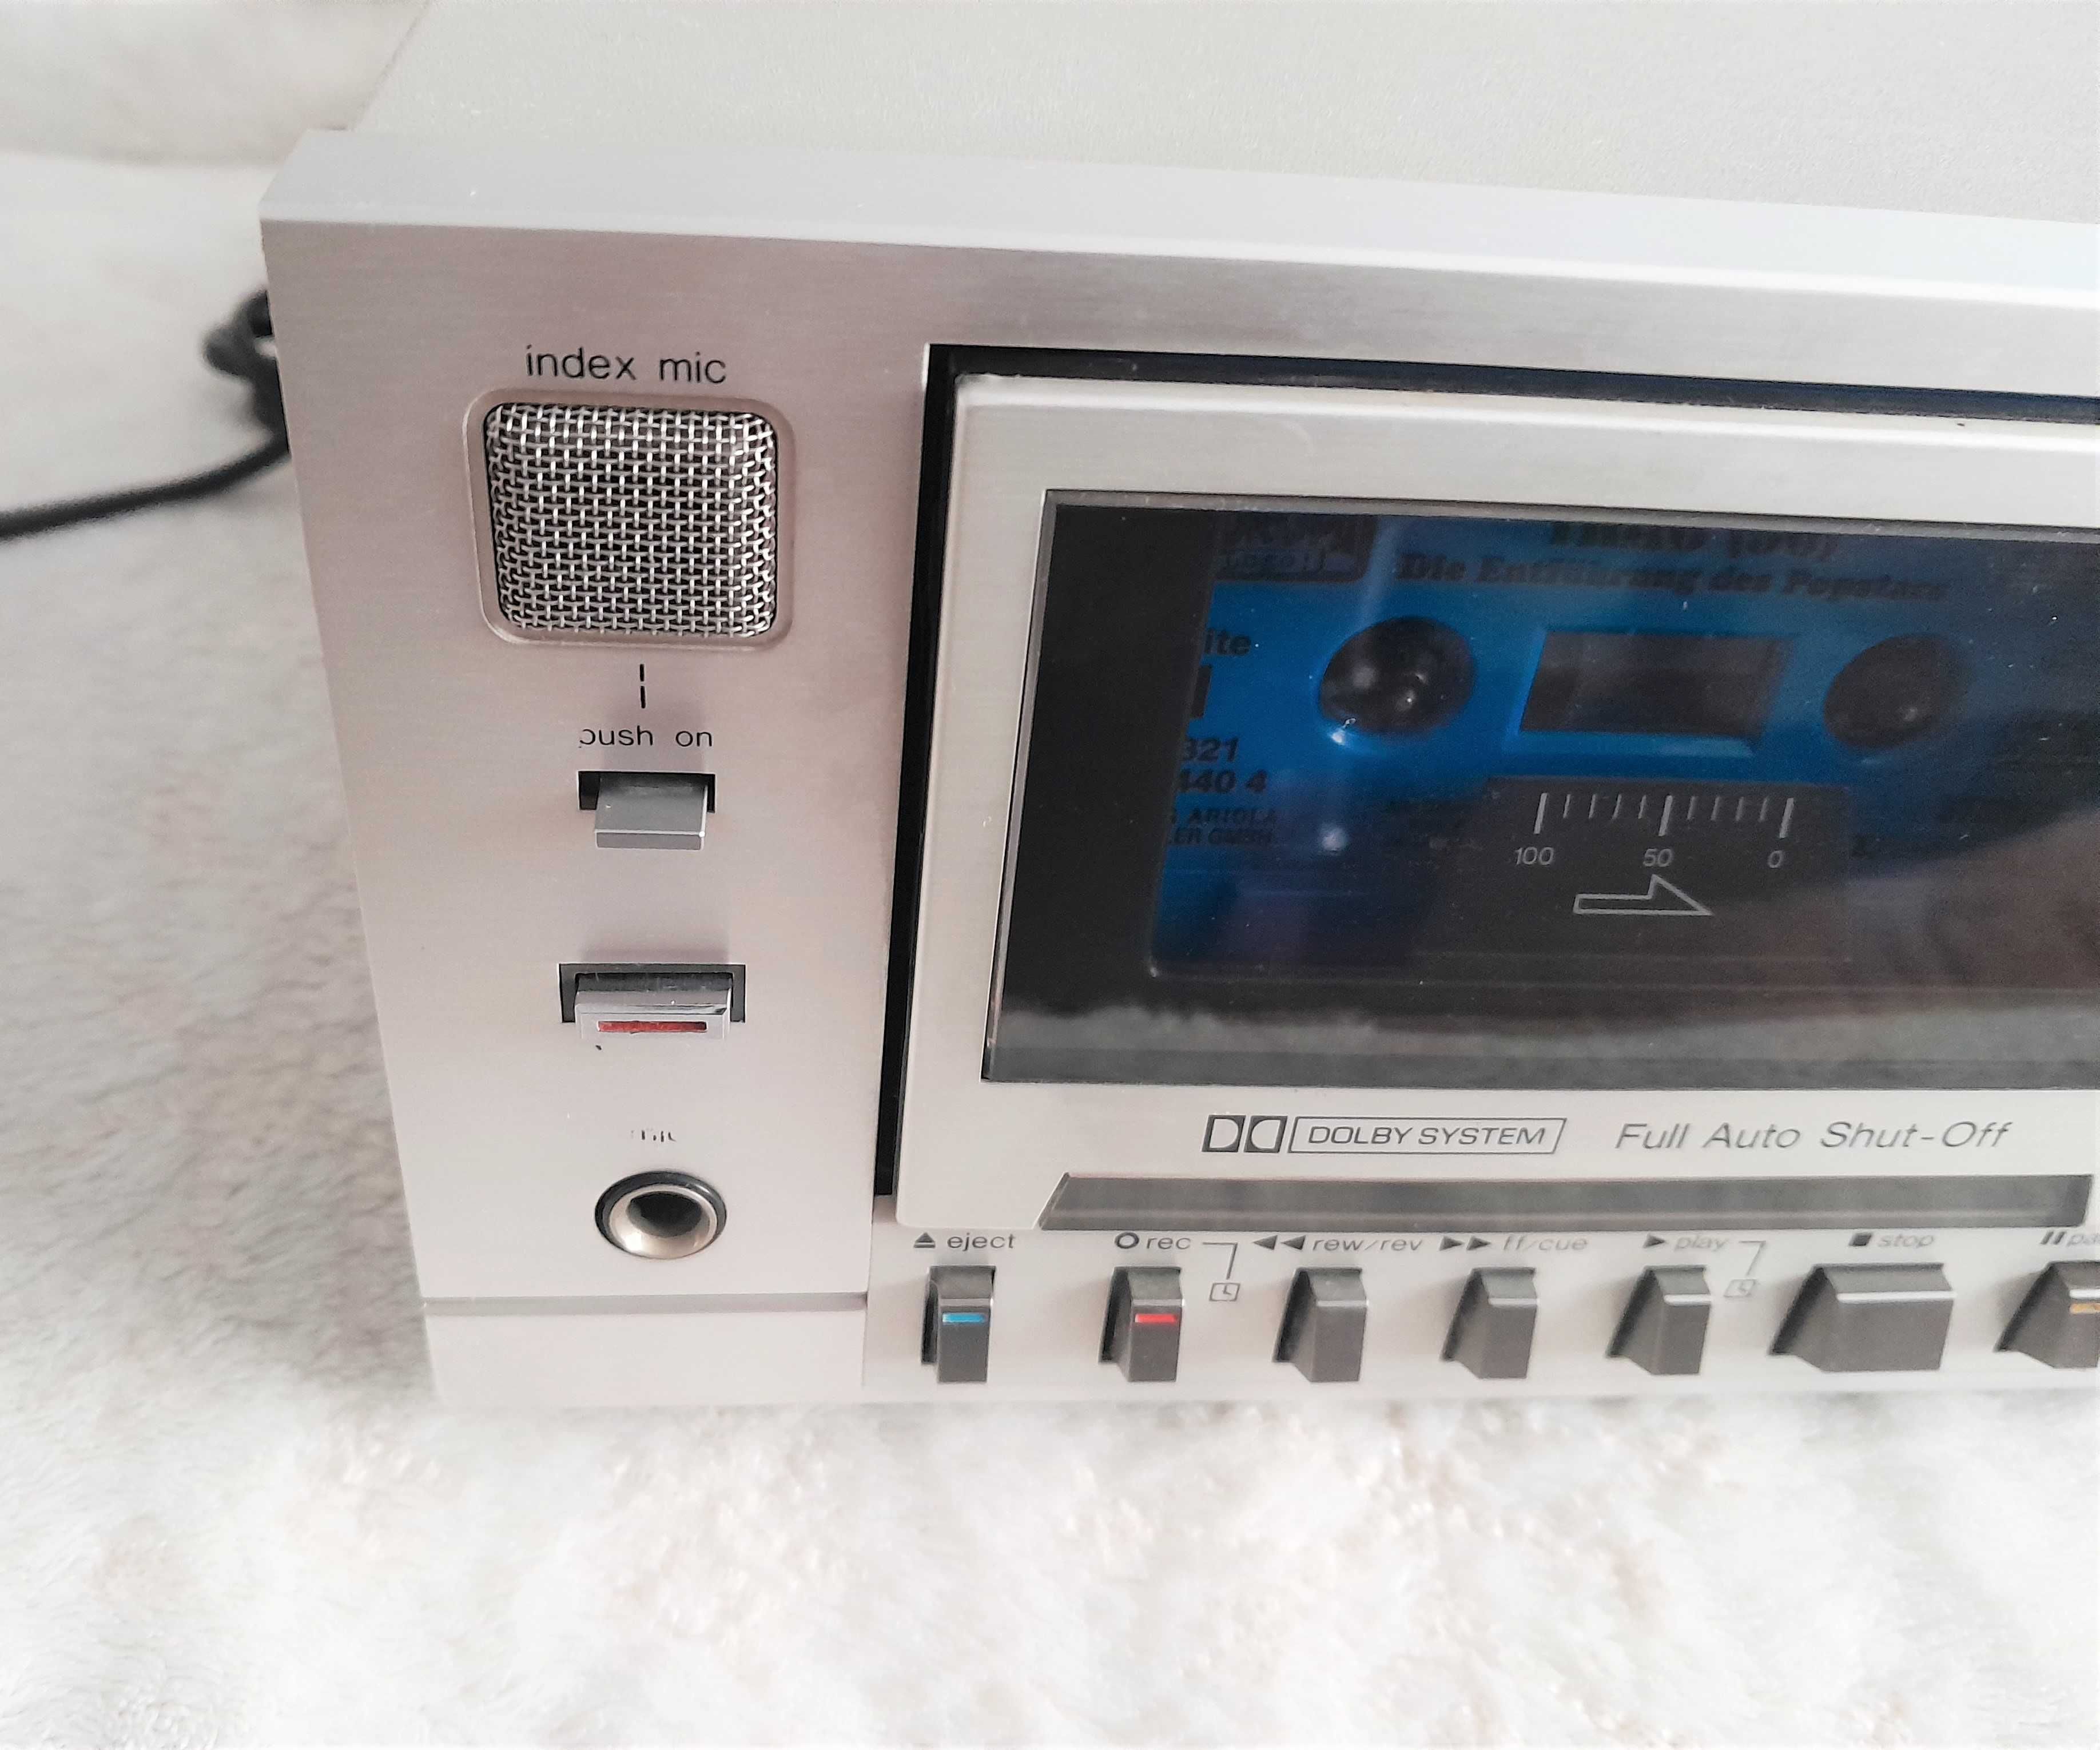 Pt.colectionari > Hi-Fi Cassette Deck Receiver PANASONIC SG-60